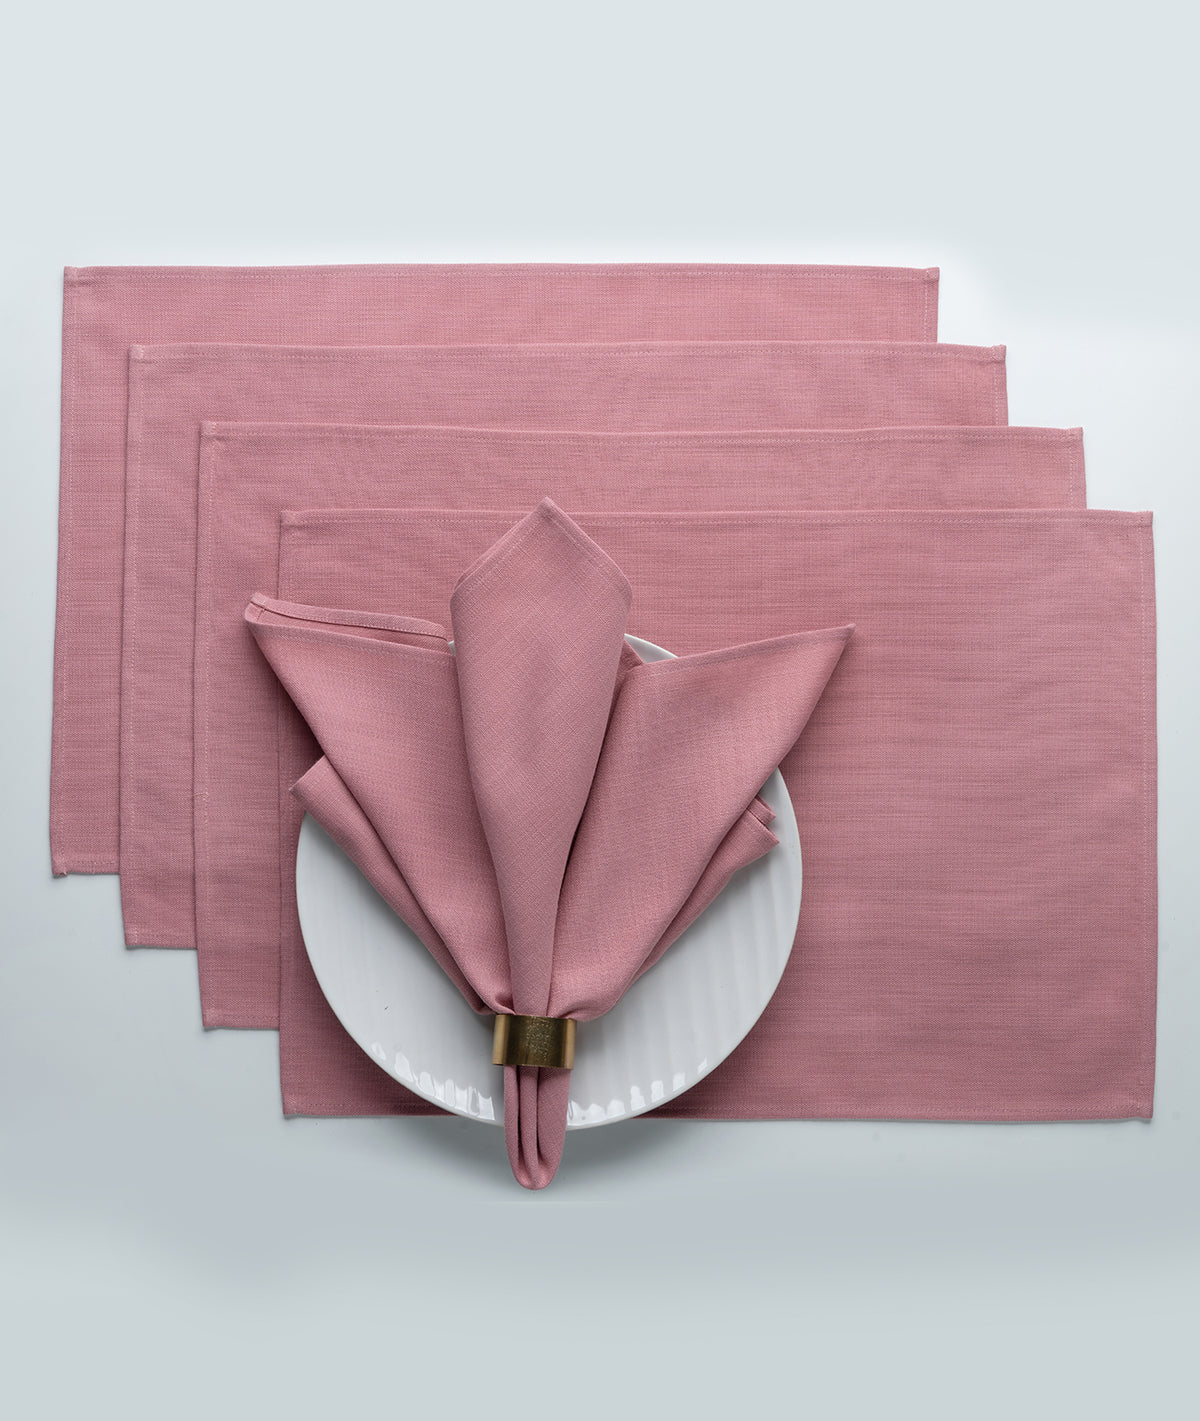 Dusty Pink Linen Textured Dinner Napkins 20 x 20 Inch Set of 4 - Plain